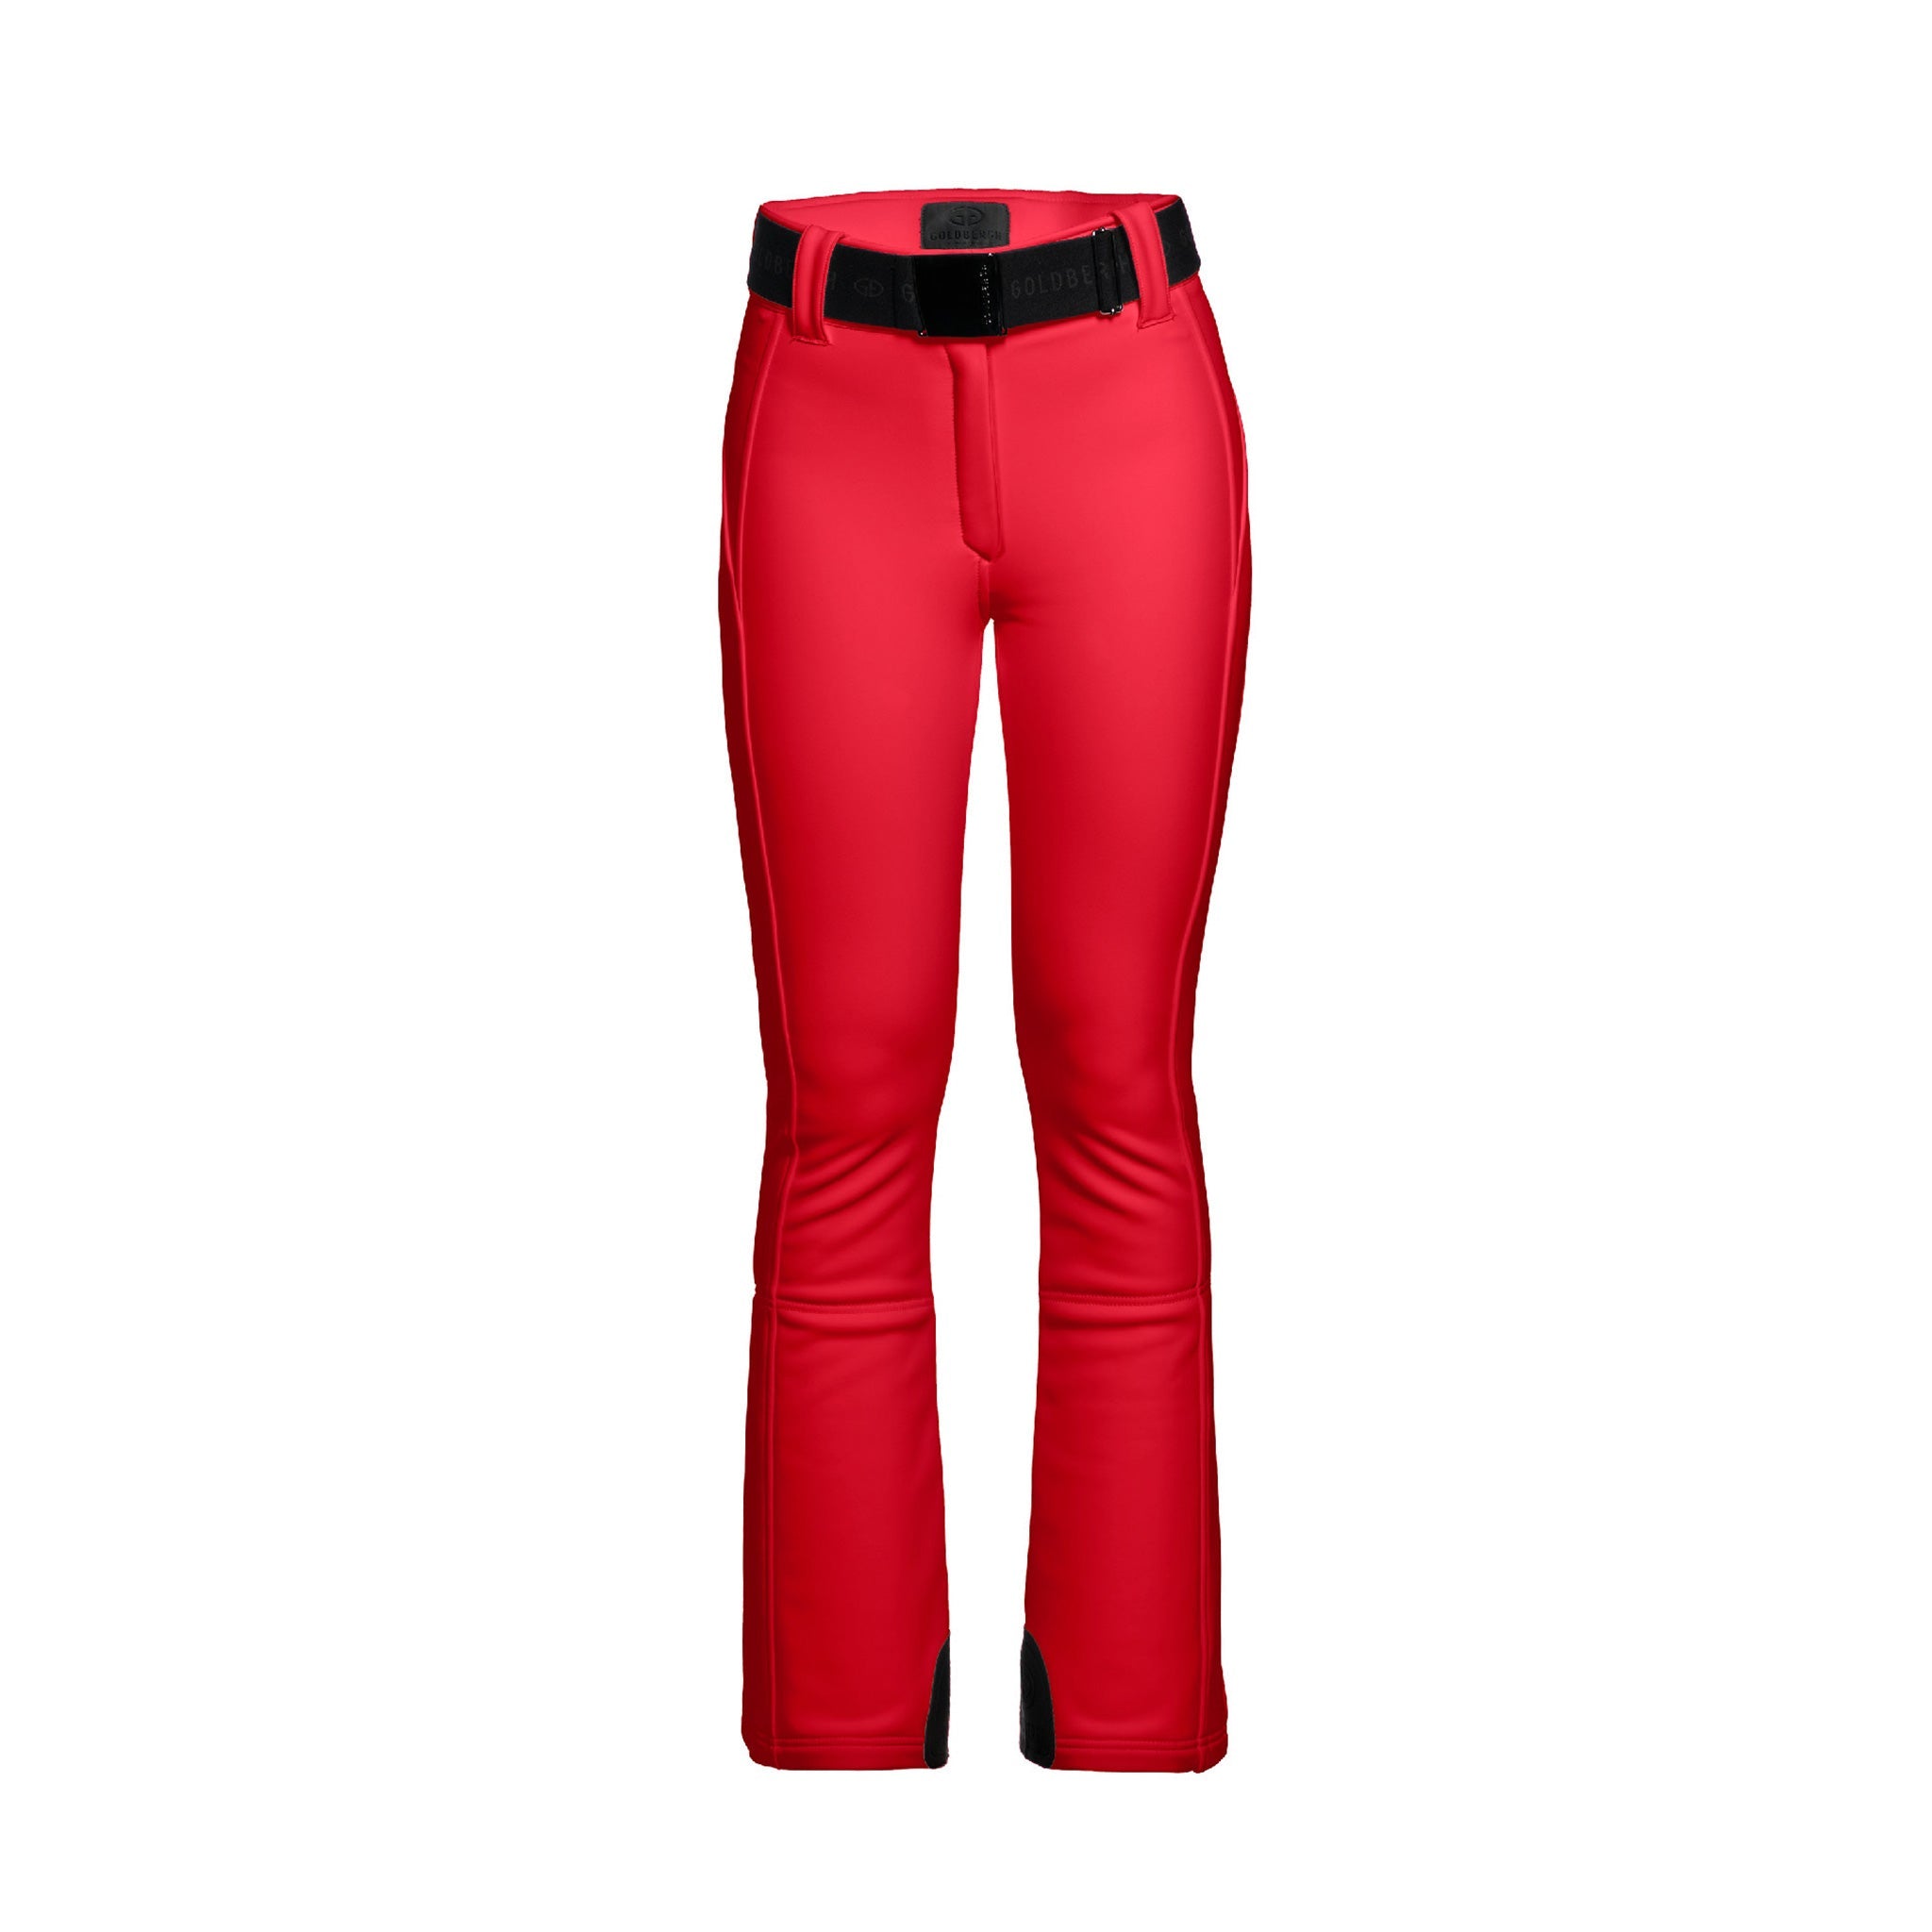 Pippa Longer Length Ski Pants in Flame Red